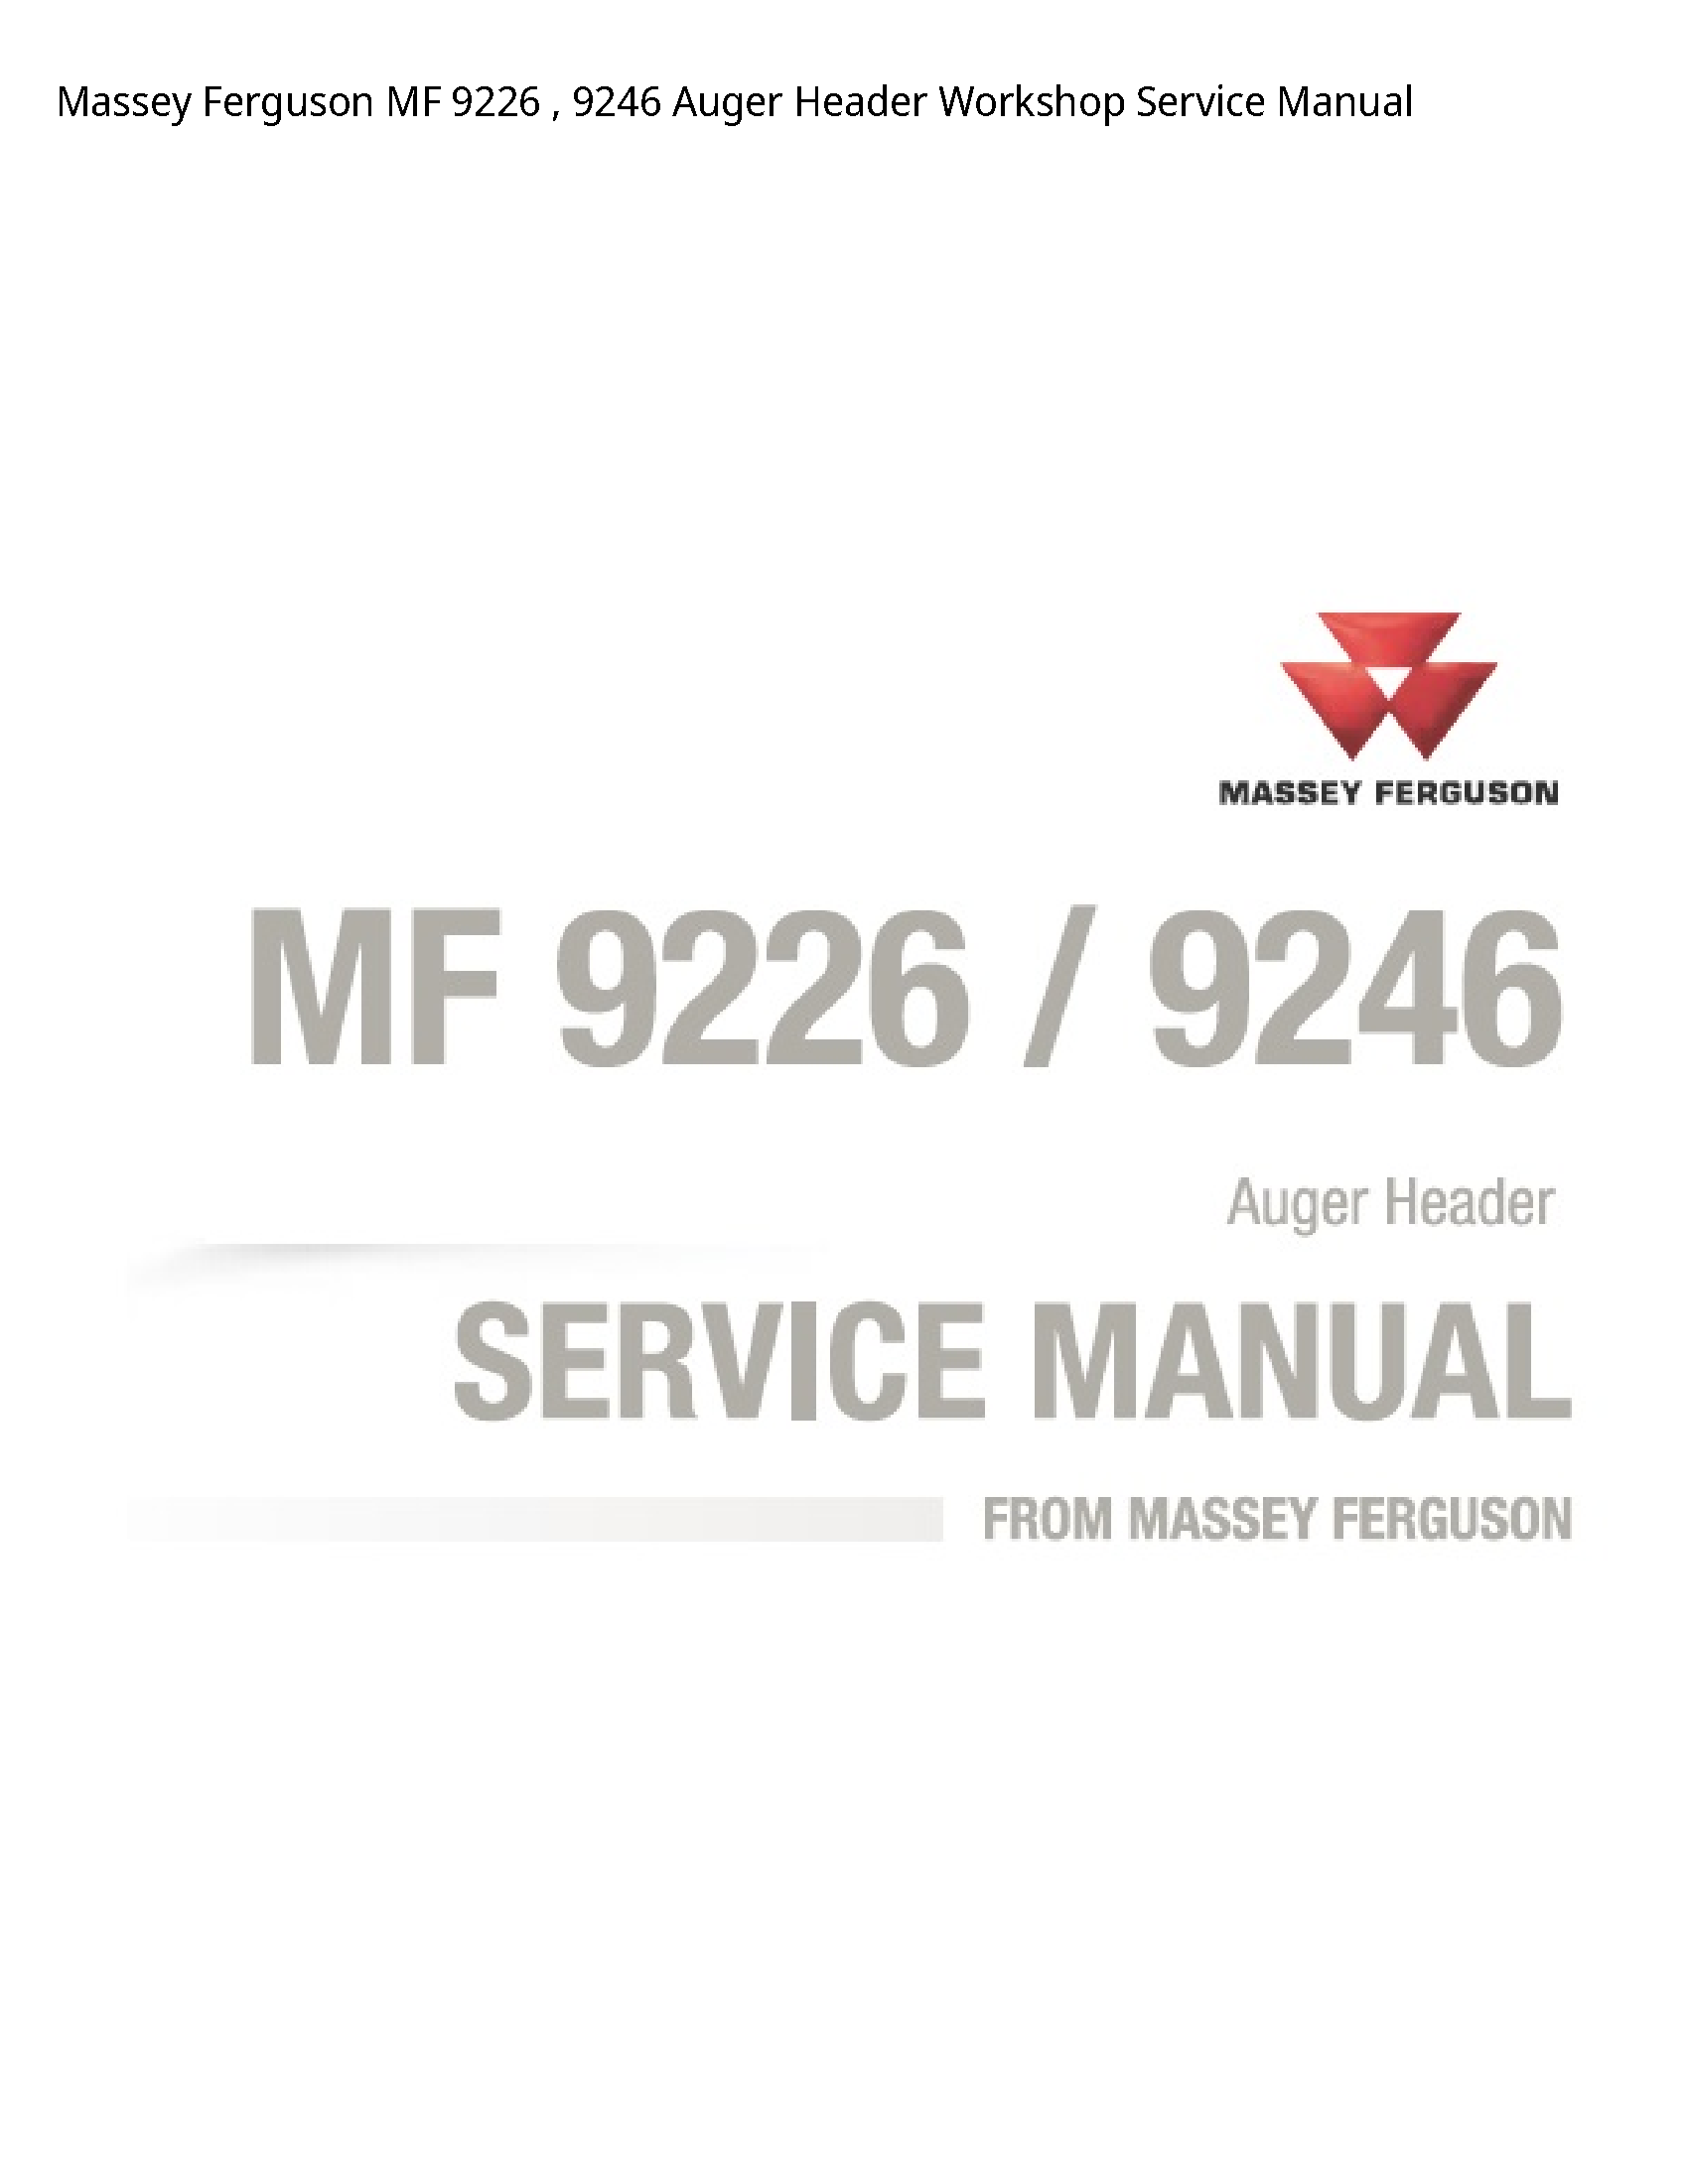 Massey Ferguson 9226 MF Auger Header Service manual